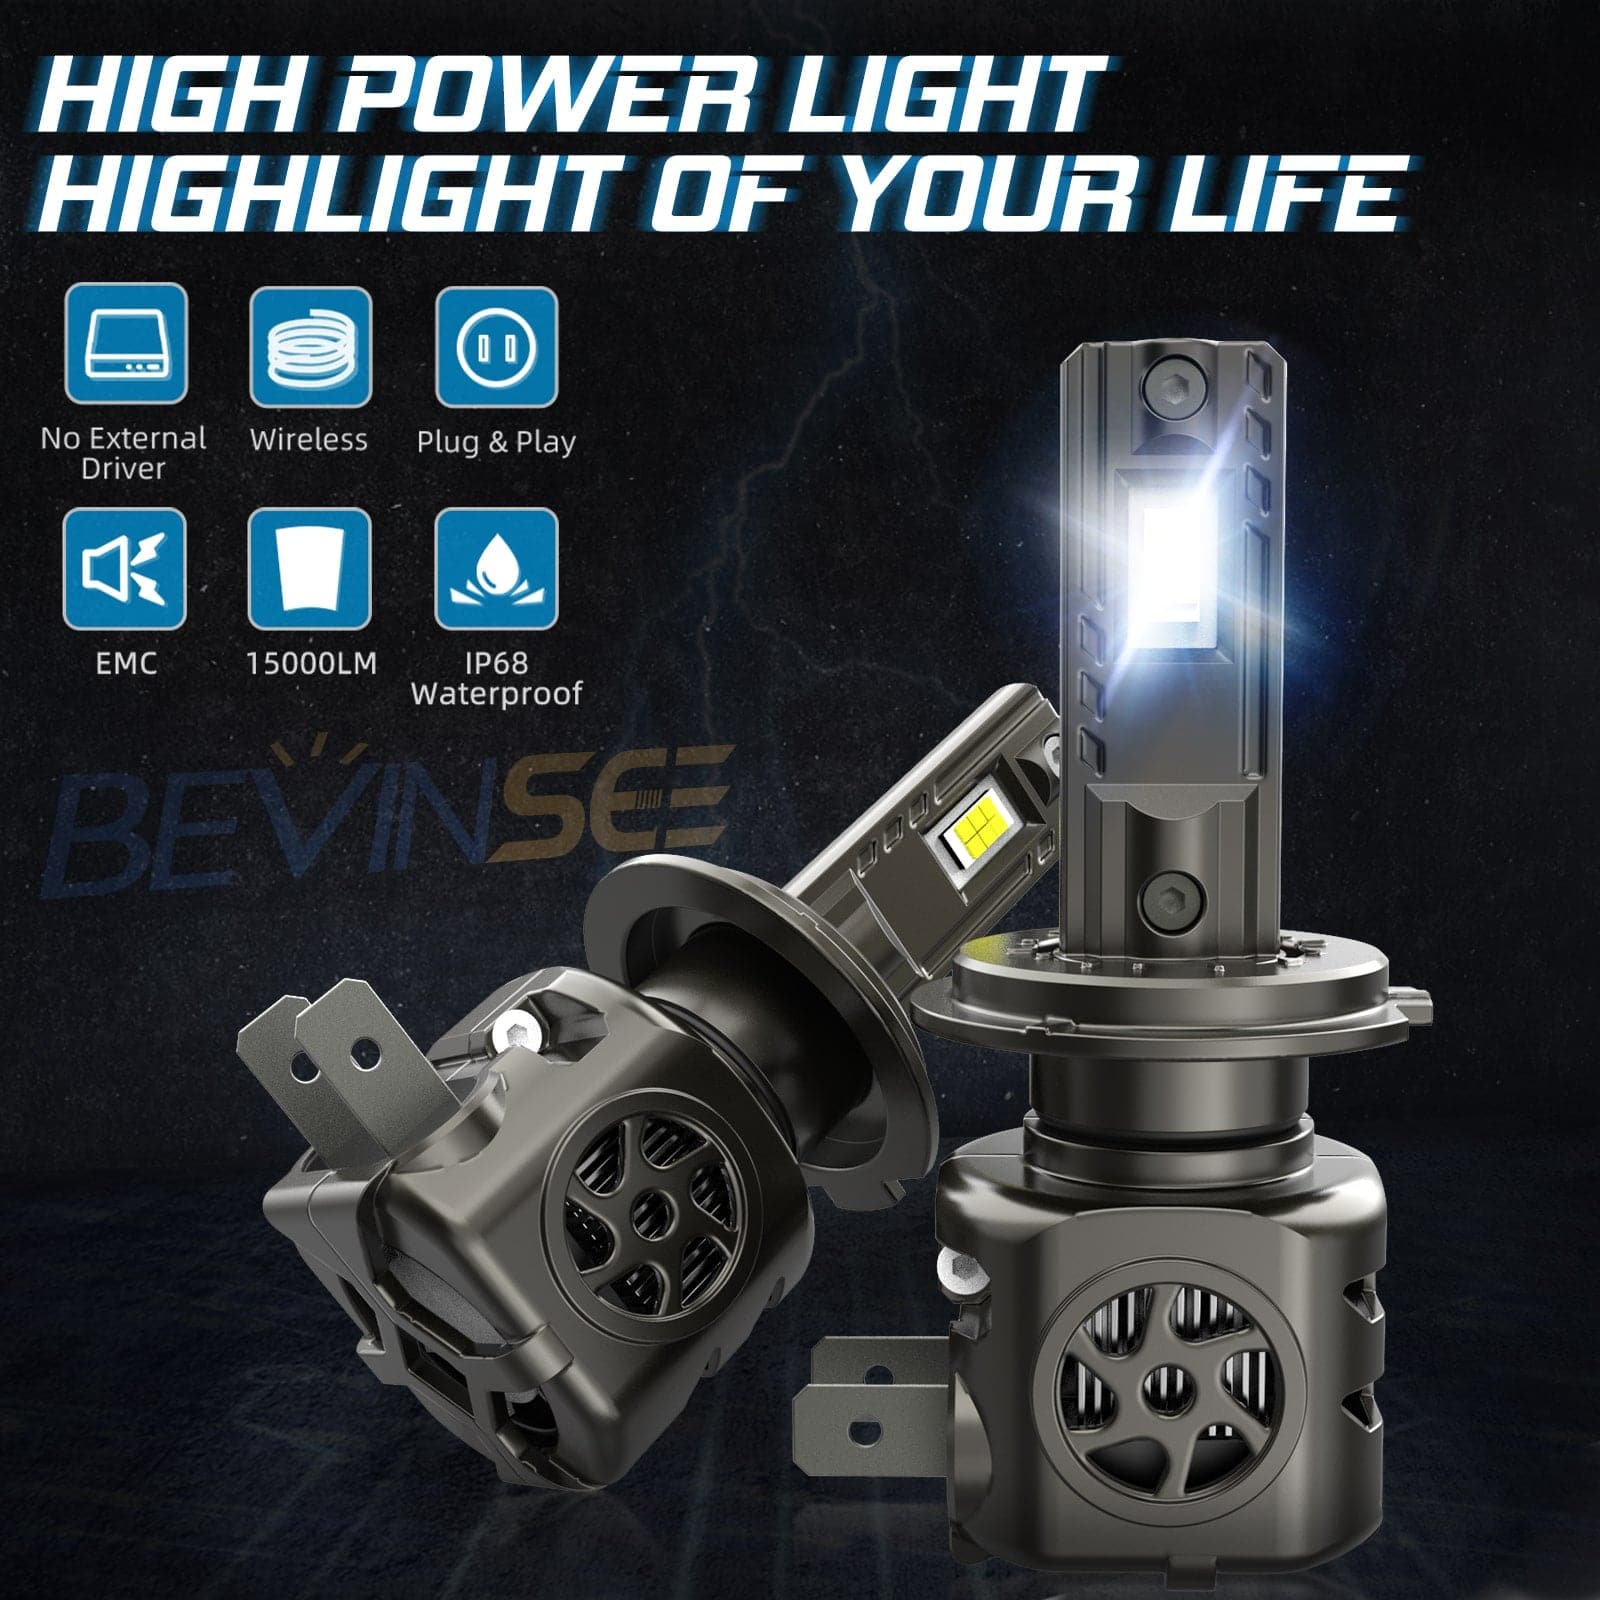 BEVINSEE S550 H7 LED Headlight Bulbs 100W 10,000LM 6000-6500K